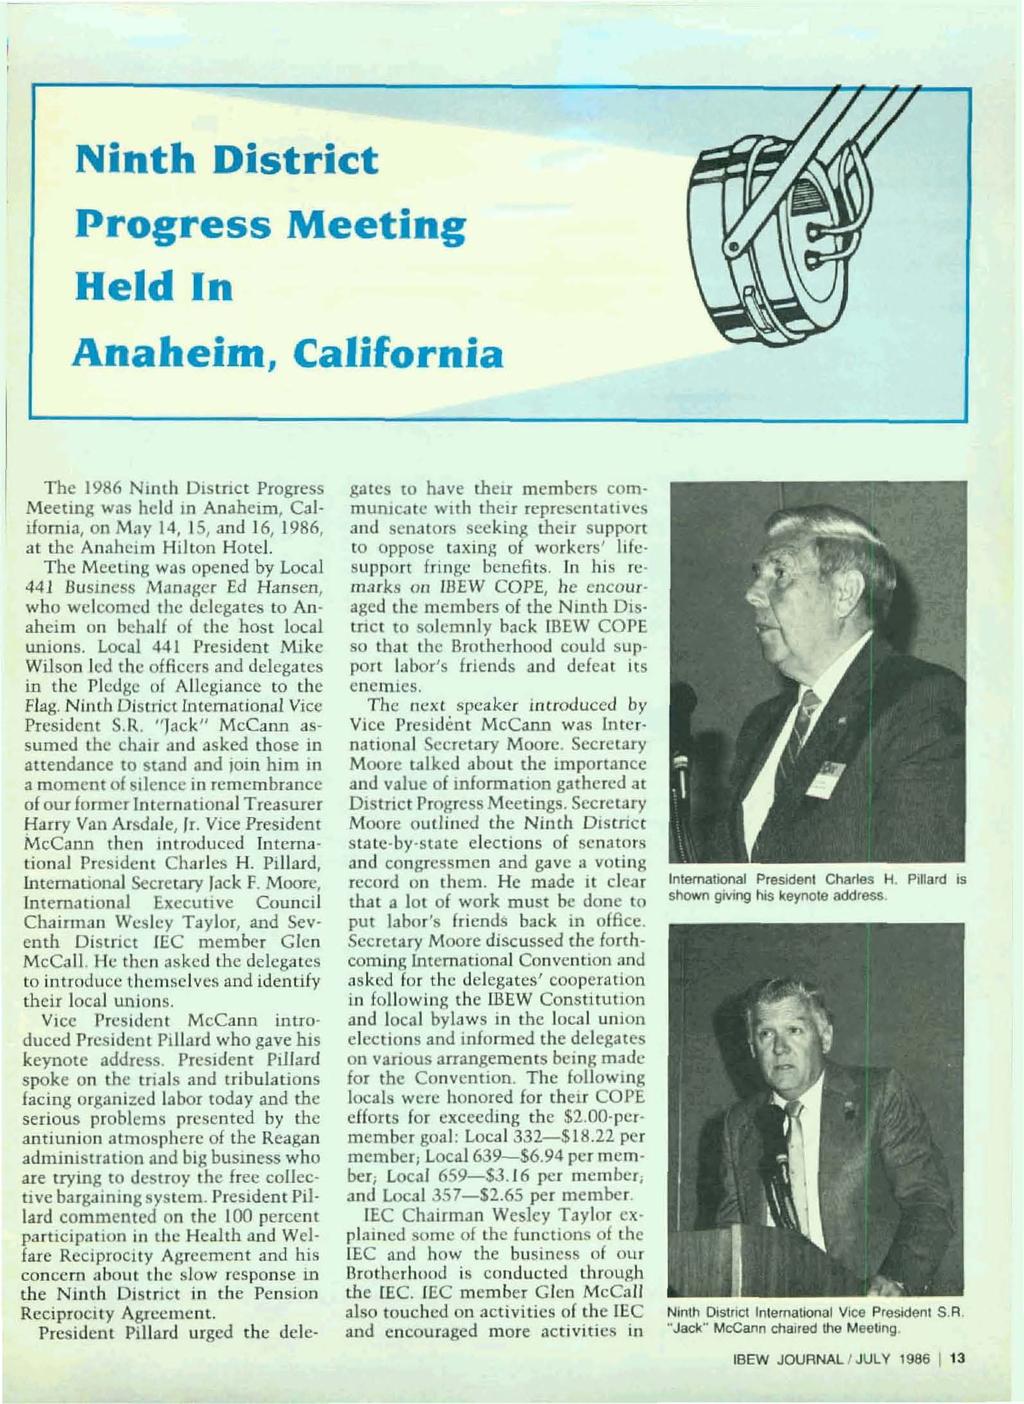 Ninth District Progress Meeting Held In Anaheim, California The 1986 Ninth D, tnct Progre s Meeting WaS held In Anaheim, Caluomia, on M.y 14, 15, and 16, 1986, at the An:lhcim Hilton HOtel.